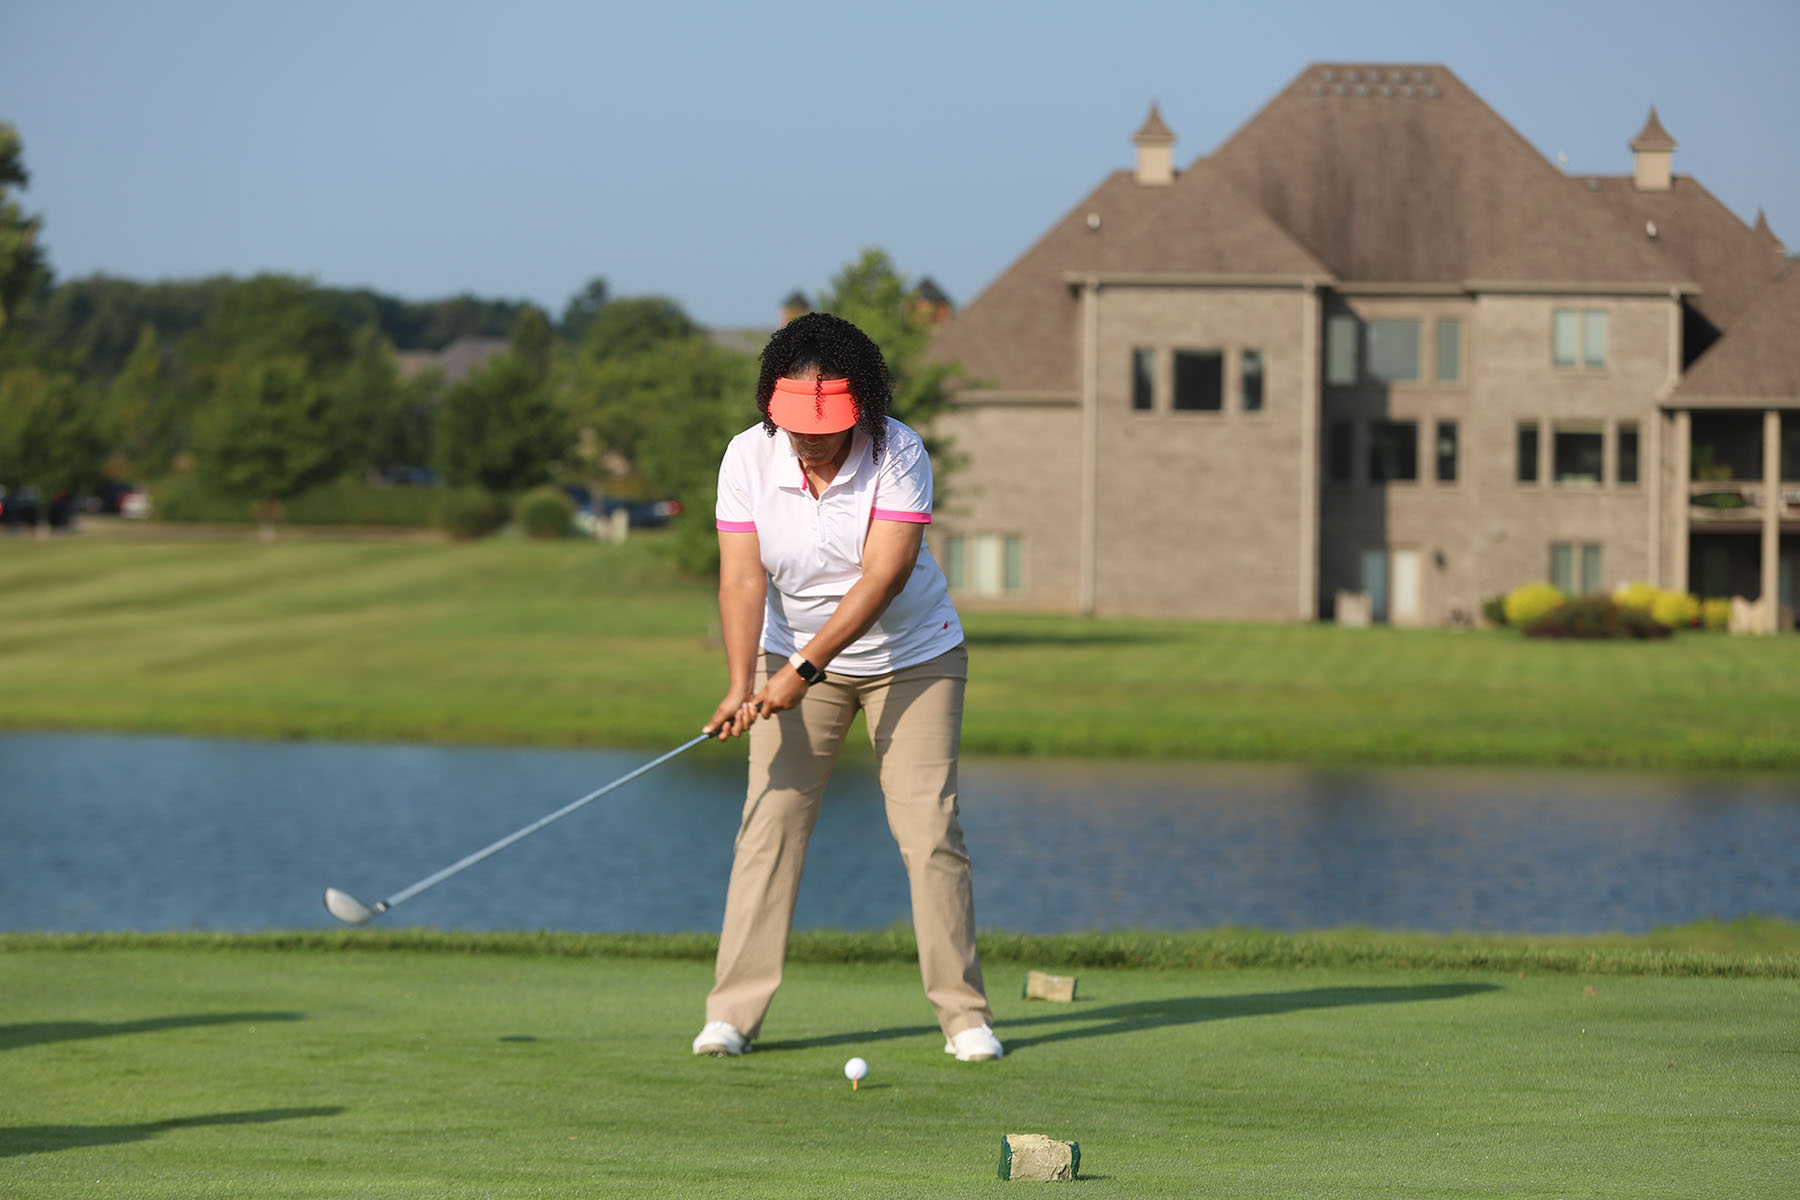 A golfer swinging at a golf ball.